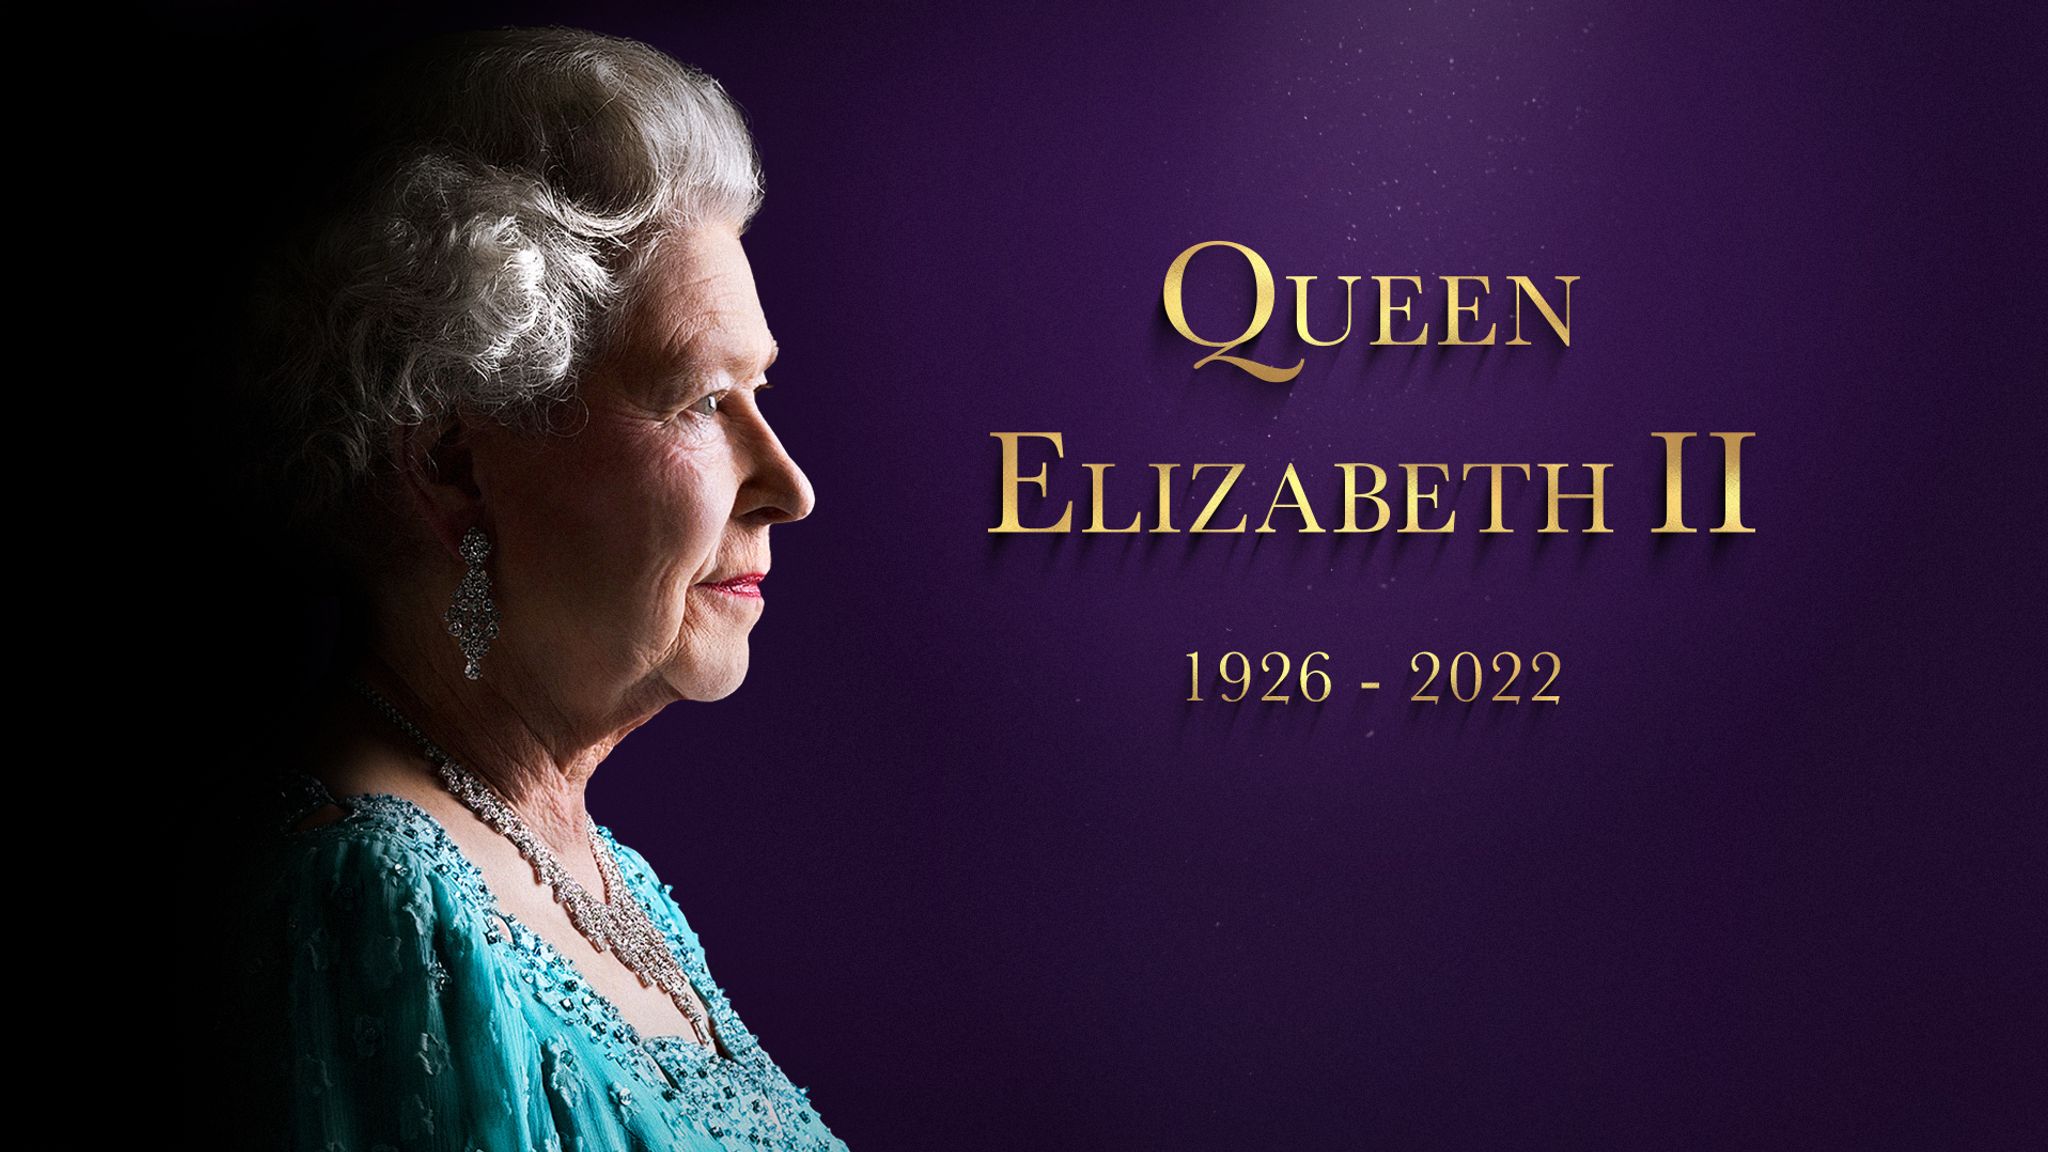 Queen Elizabeth II has died aged 96, Buckingham Palace announces | News News | Sky Sports